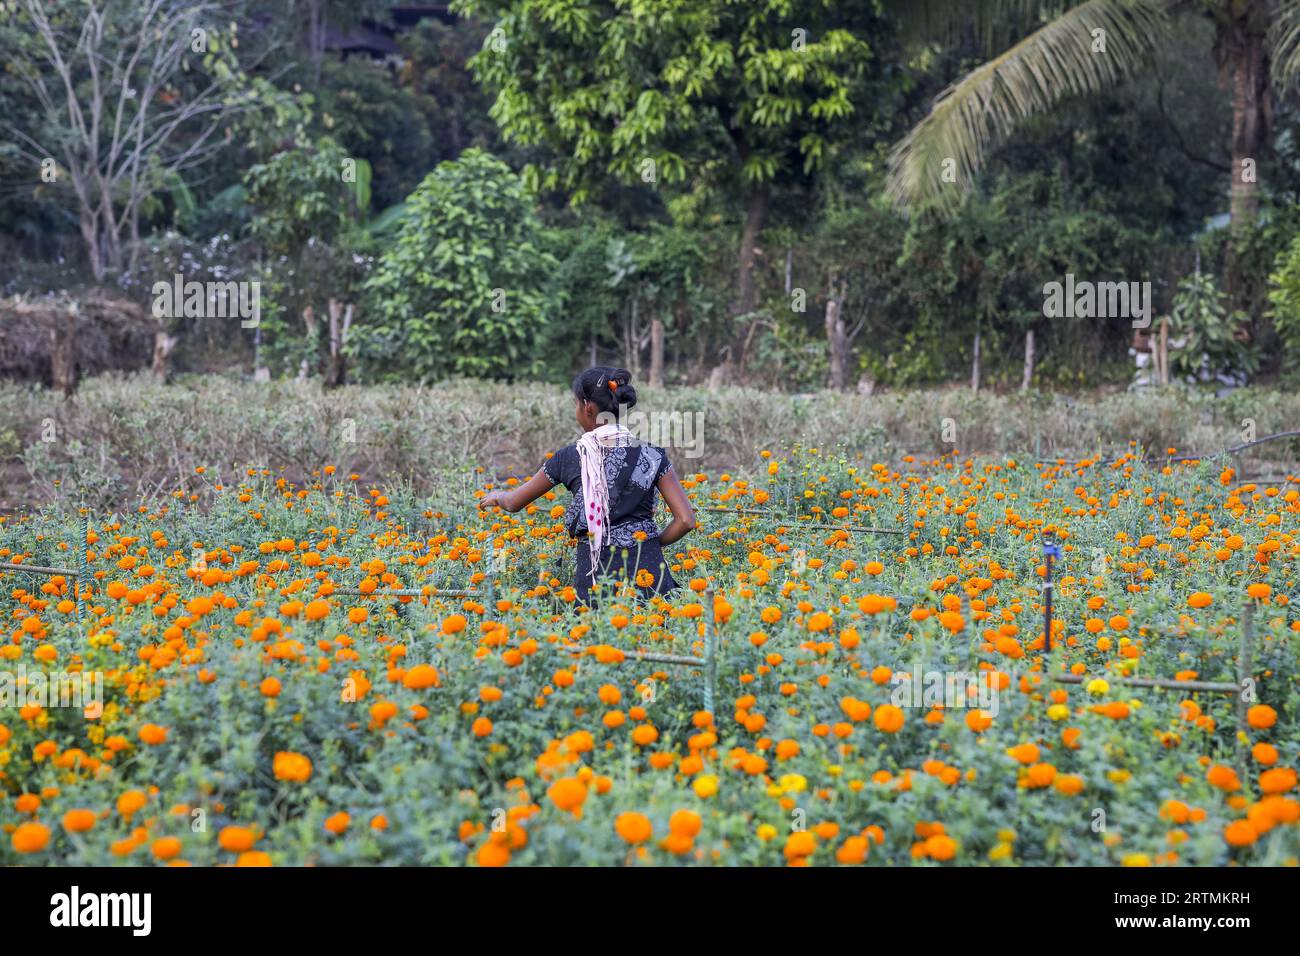 Gärtner pflückt Blumen in einem der Gärten des Goverdan Ecovillage, Maharashtra, Indien Stockfoto